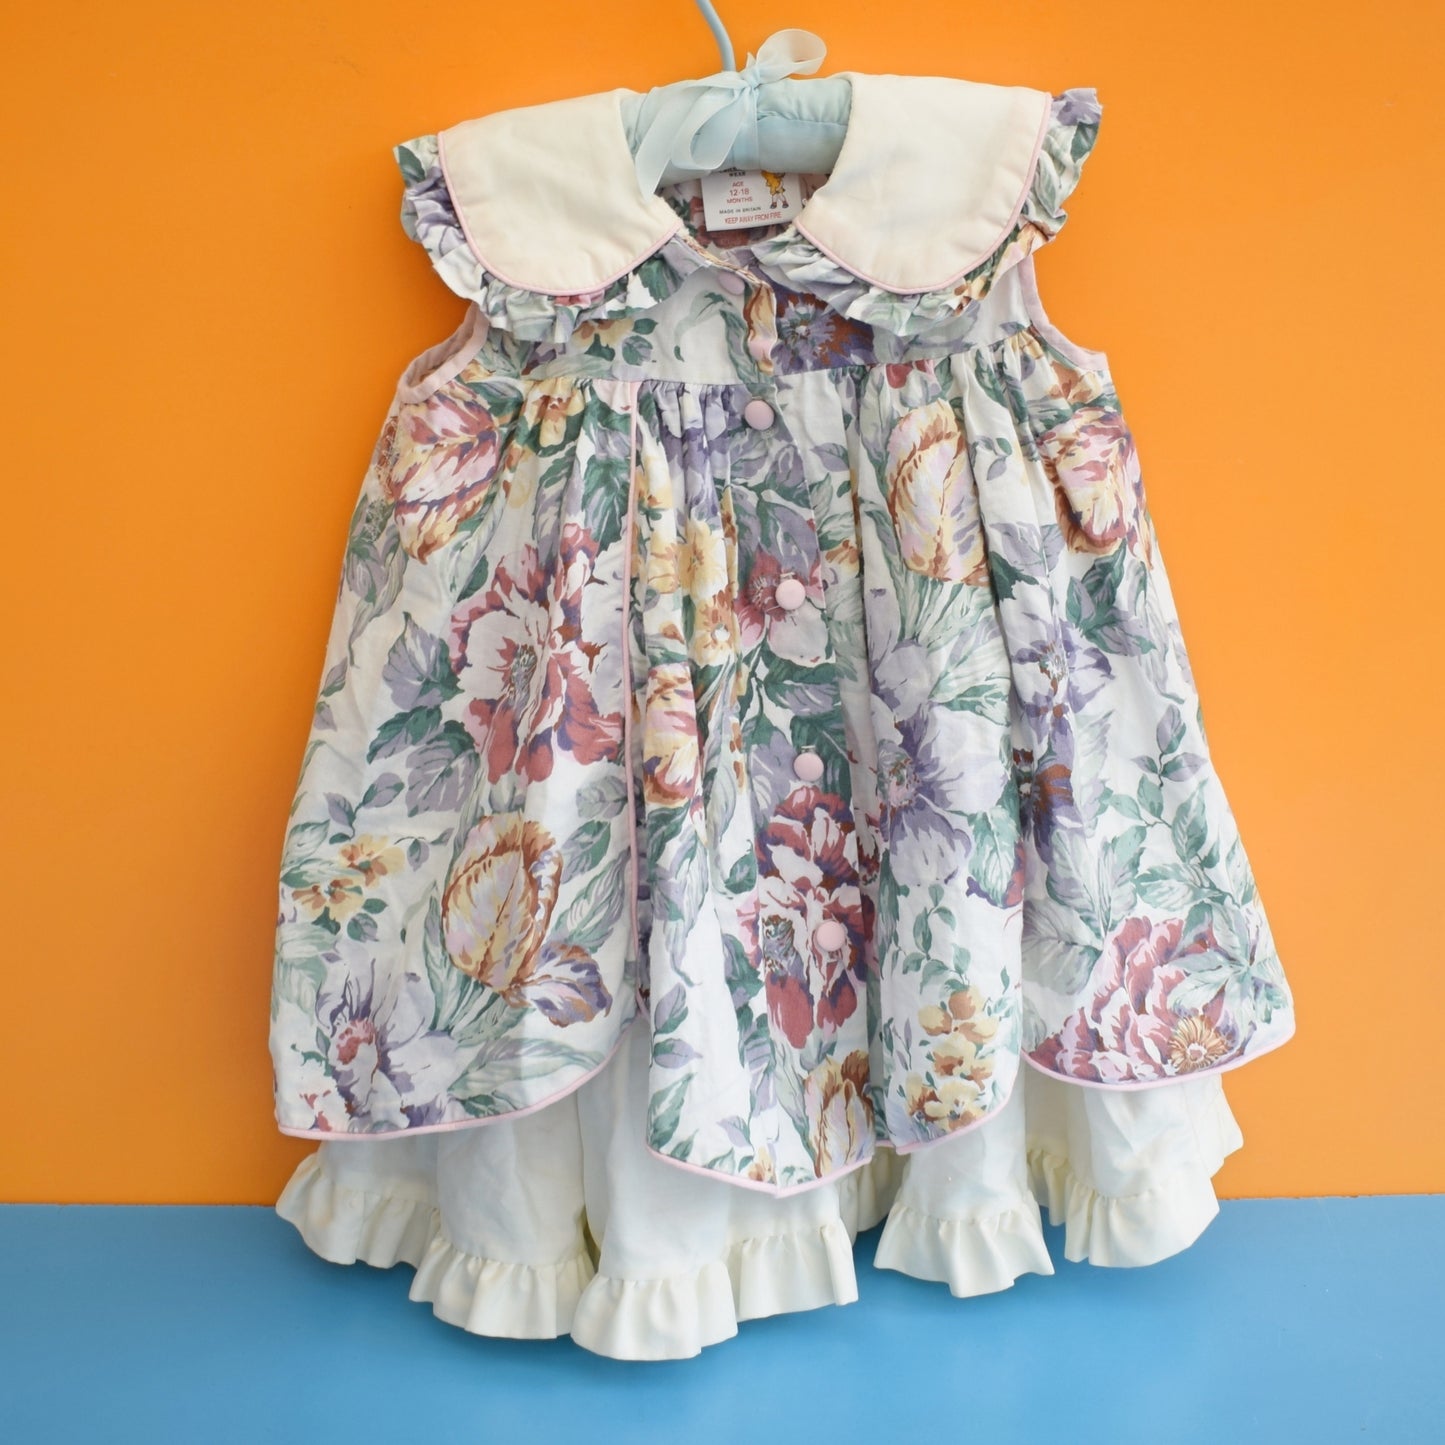 Vintage 1980s Girls Baby Dress- Frills & Florals 12-18 Months